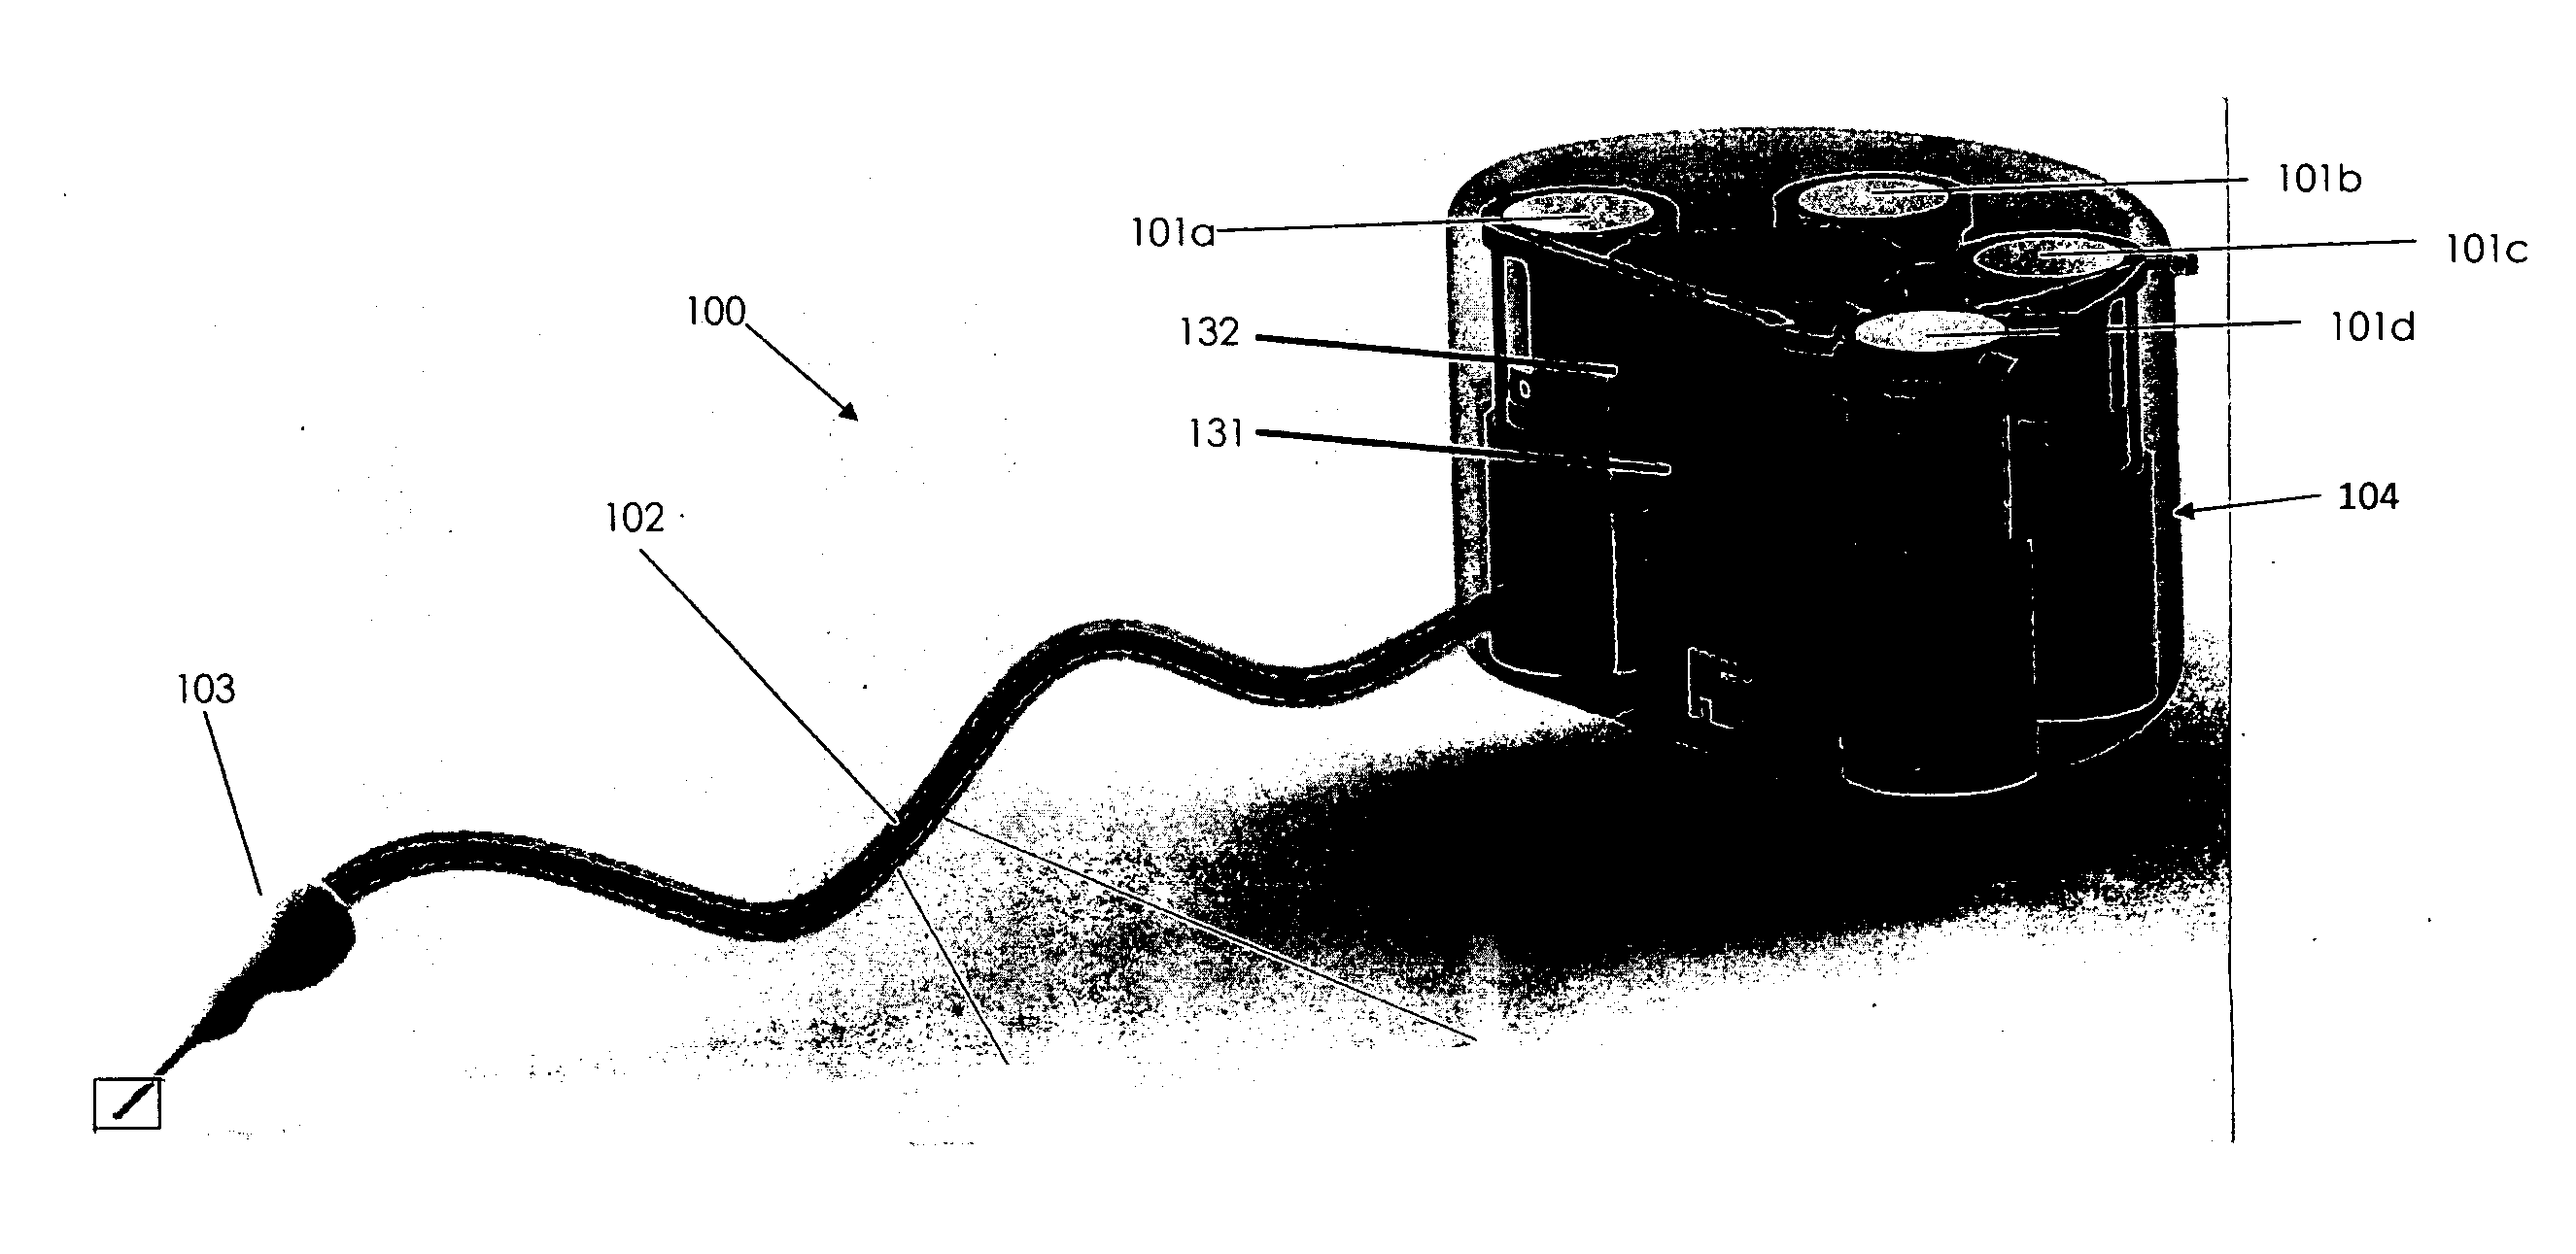 Debridement apparatus using linear lorentz-force motors